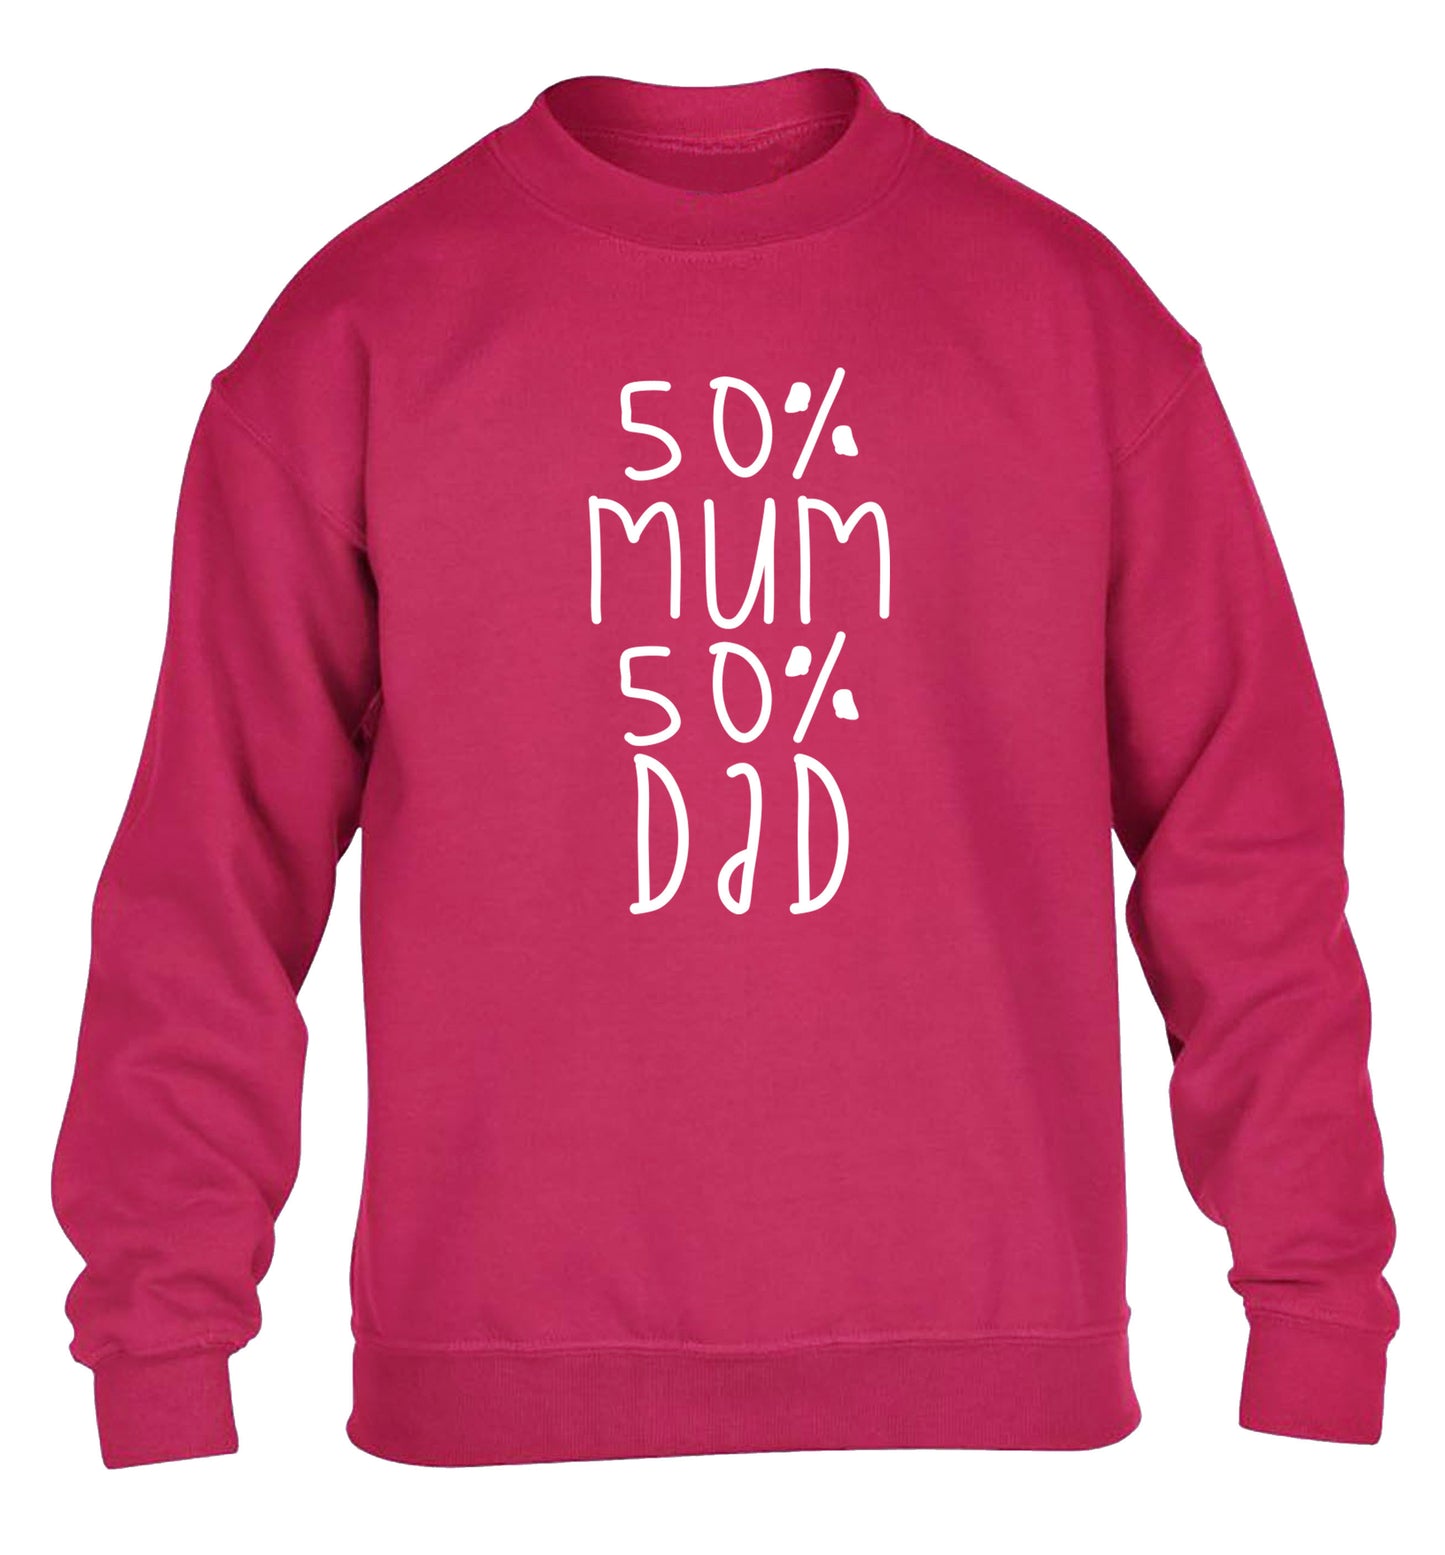 50% mum 50% dad children's pink sweater 12-14 Years